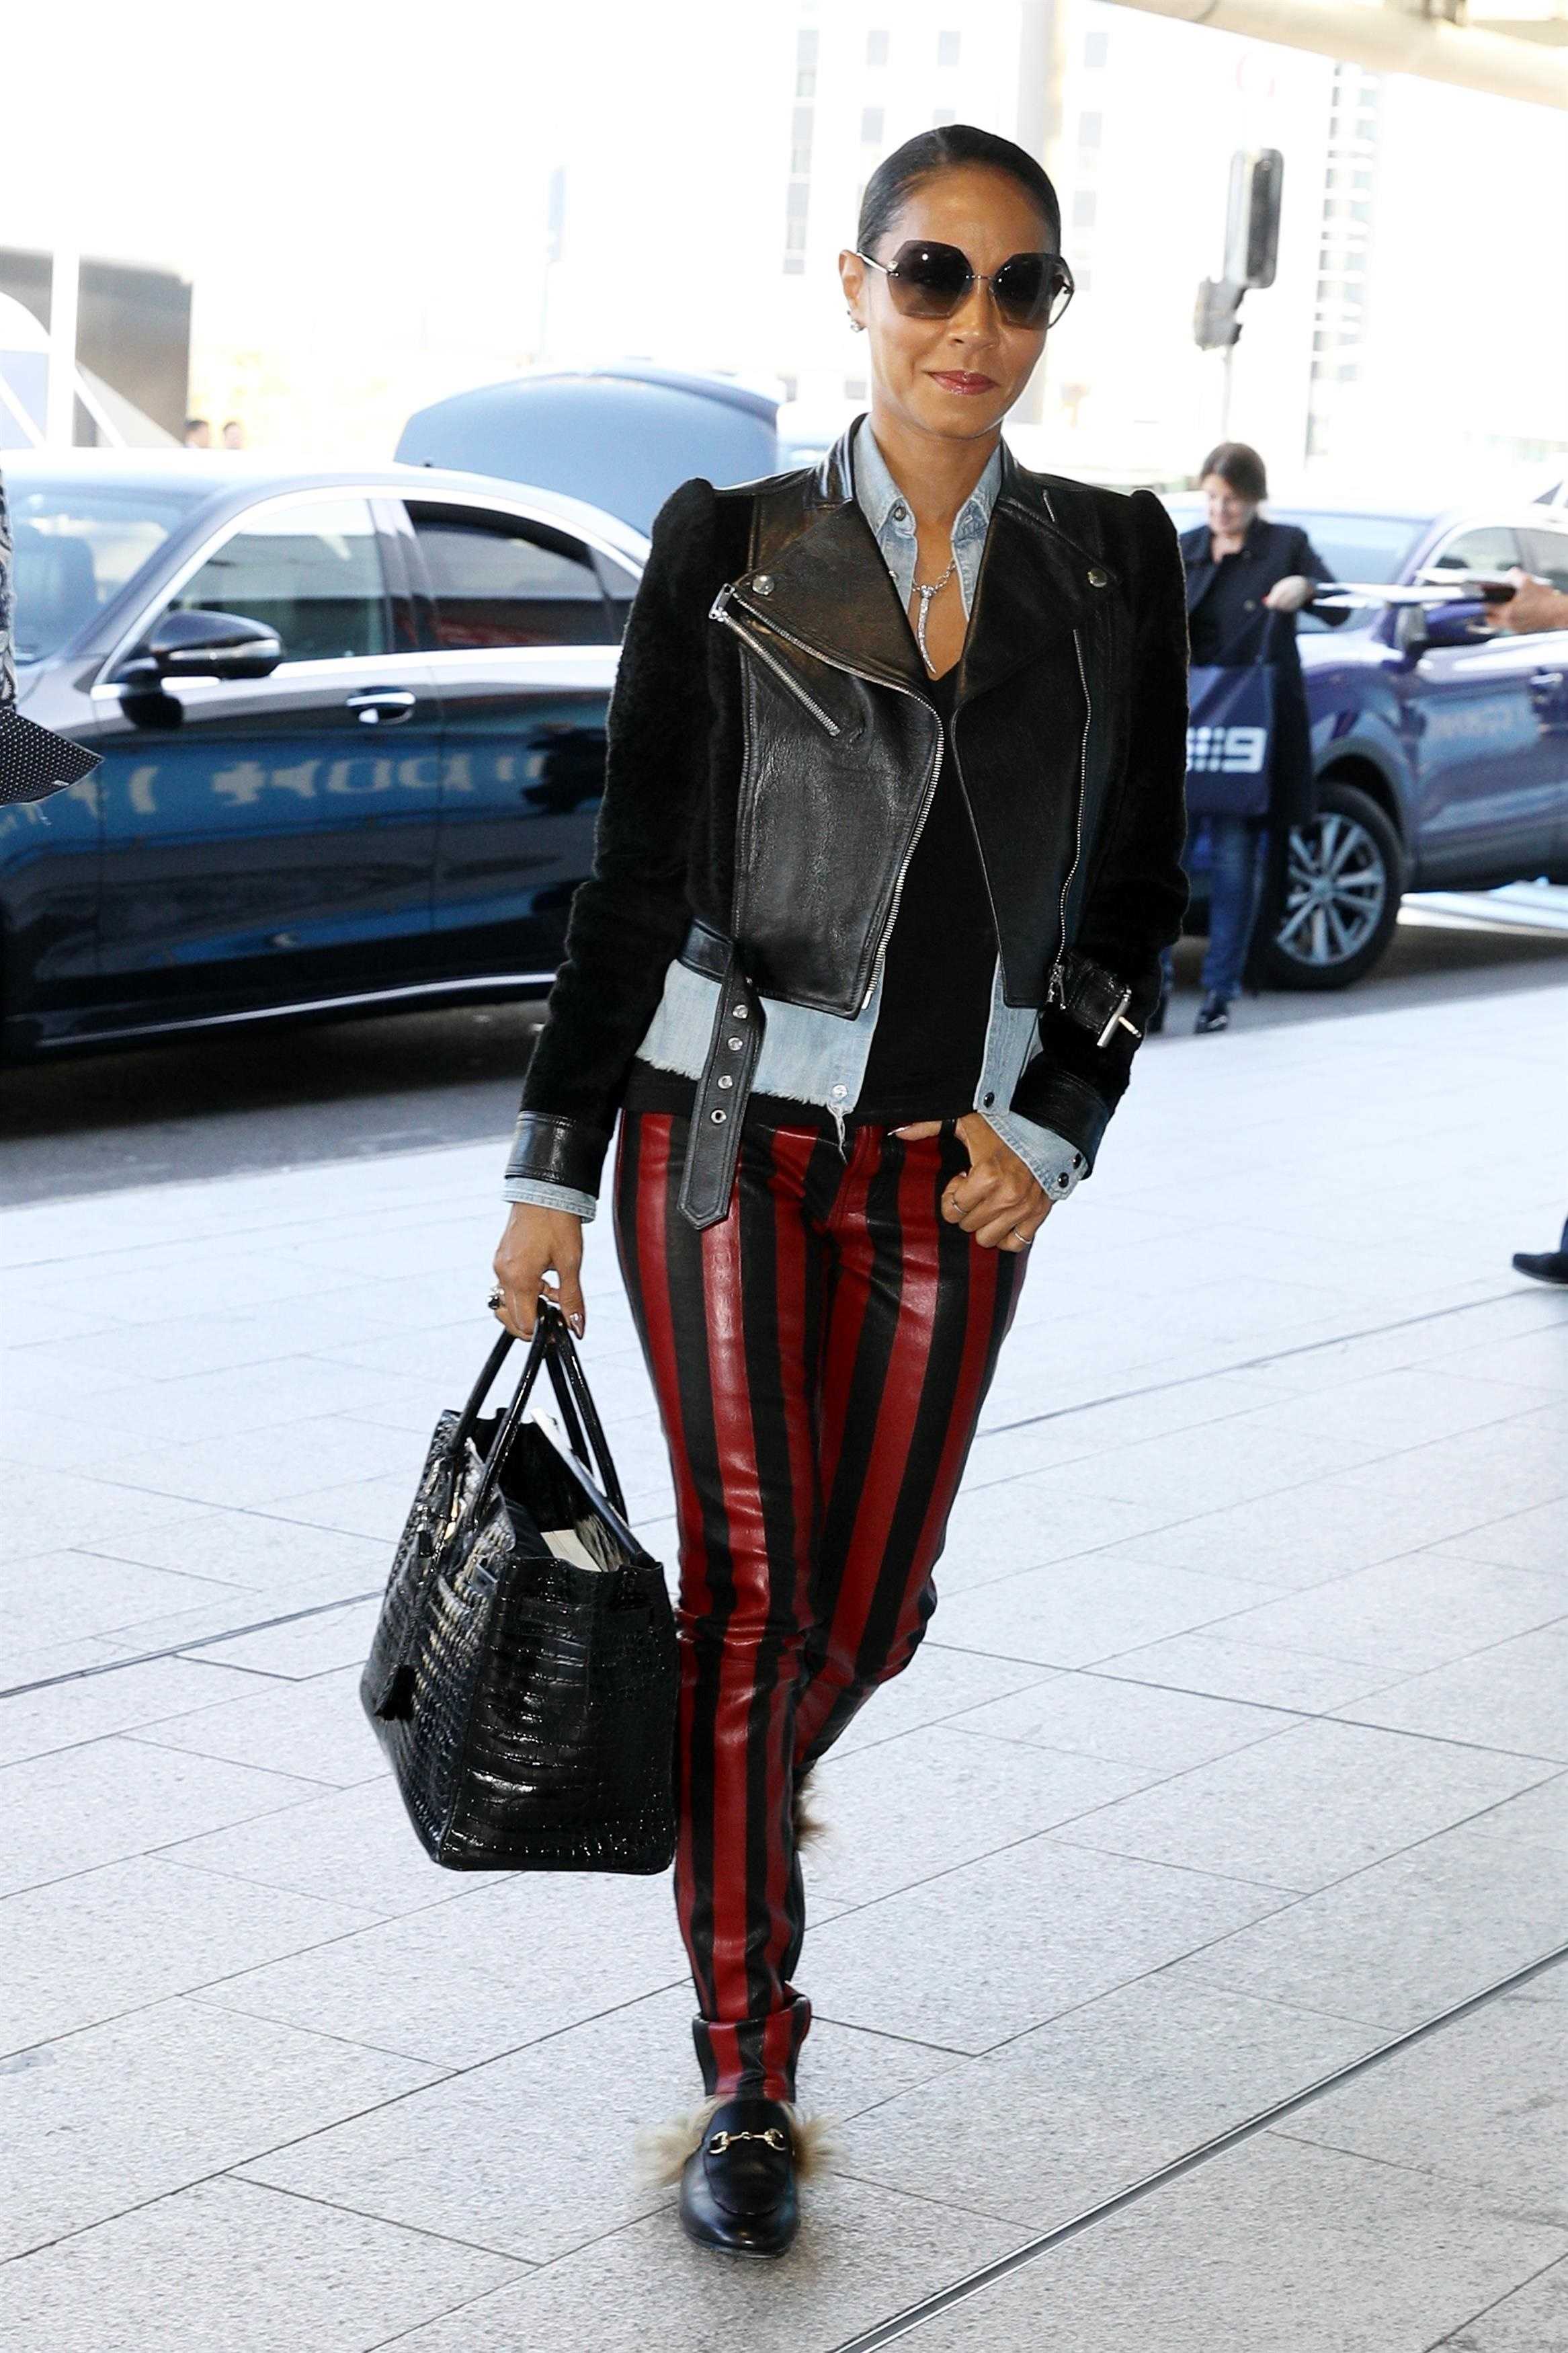 Jada Pinkett Smith seen at the Sydney airport